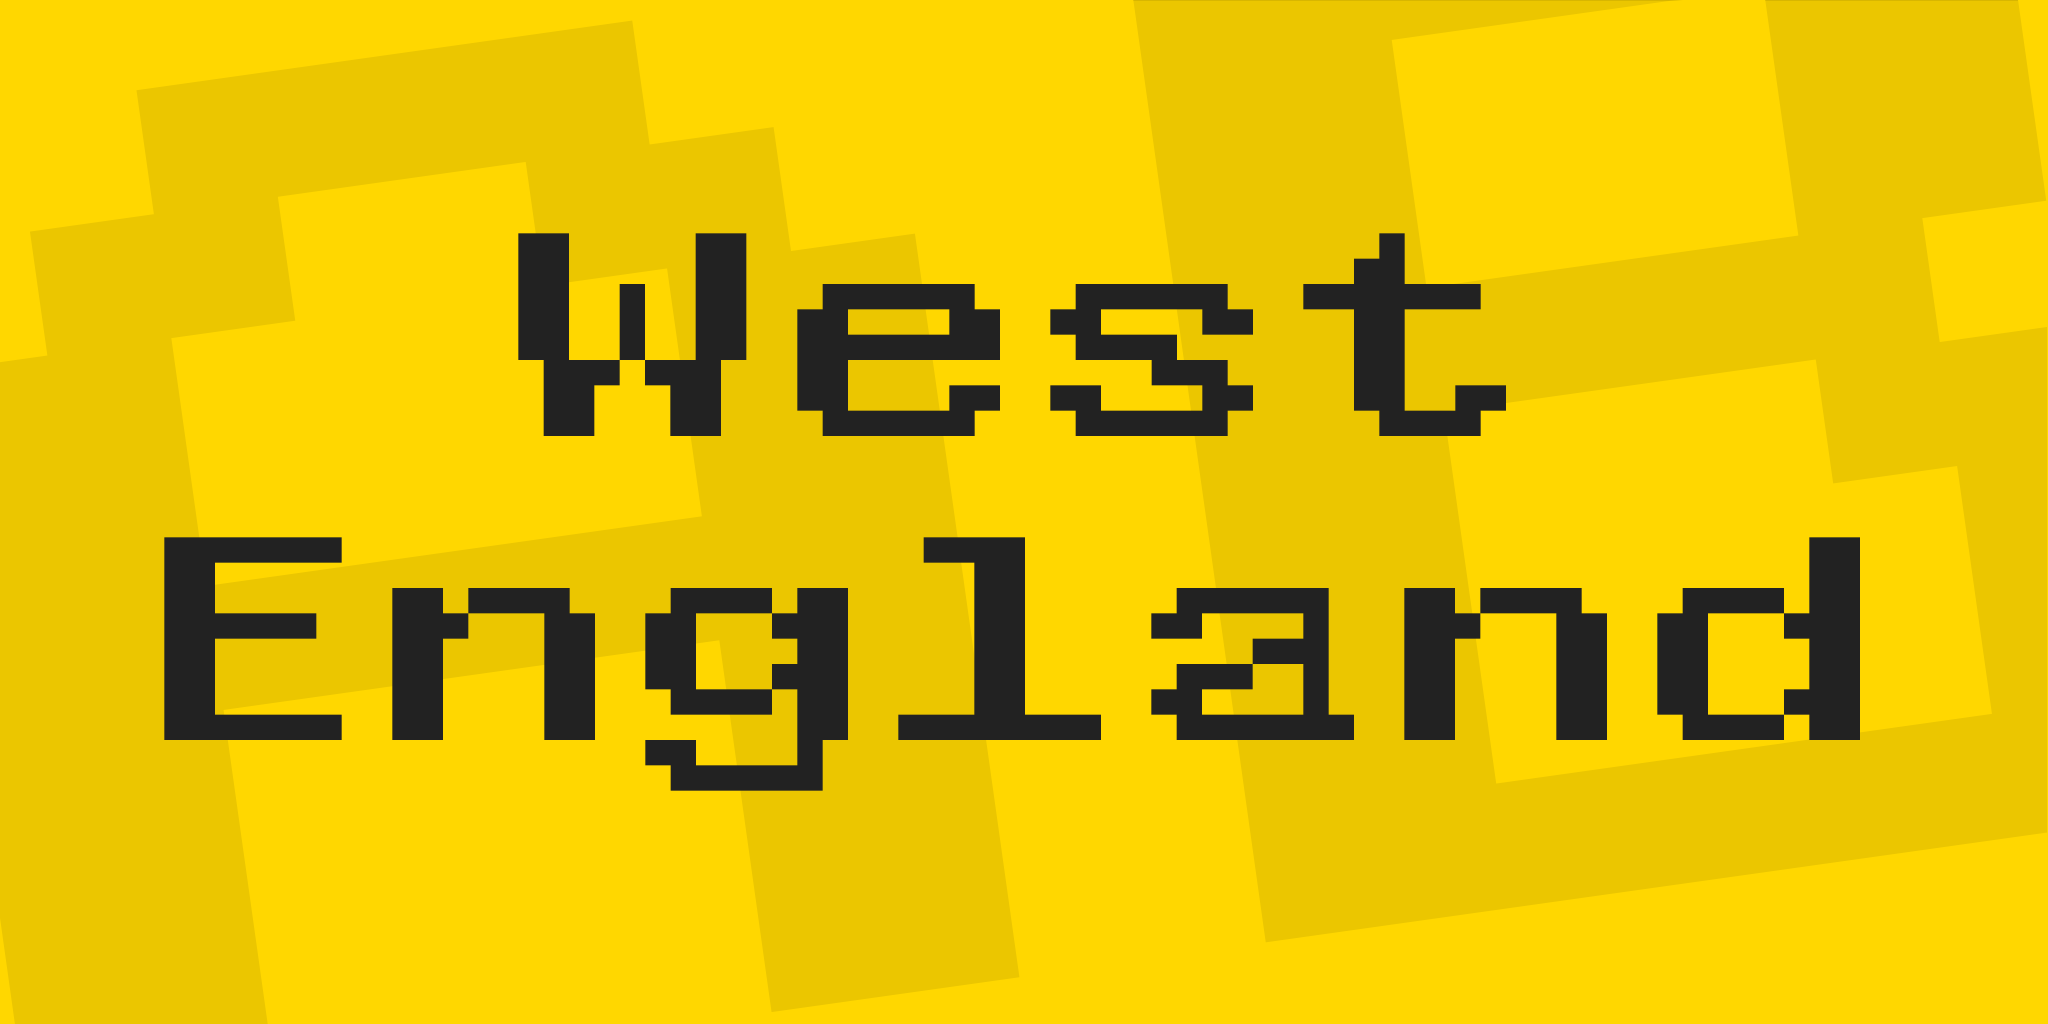 West England